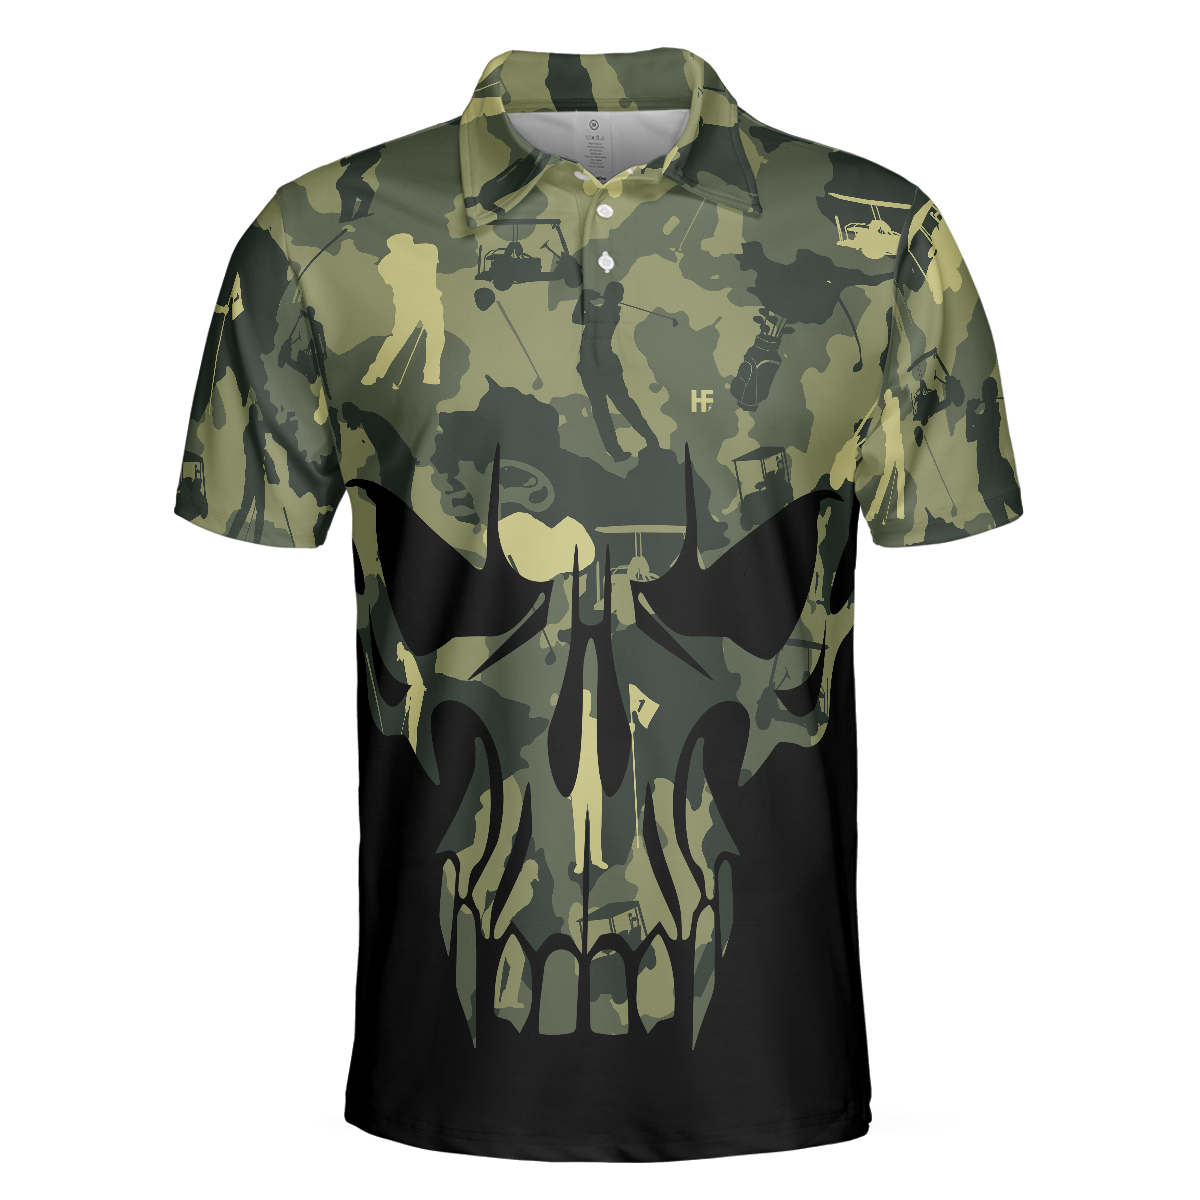 Make Par Not War Polo Shirt Camouflage Pattern Golf Shirt For Veterans Golf Gift Idea For Military Dad - 3